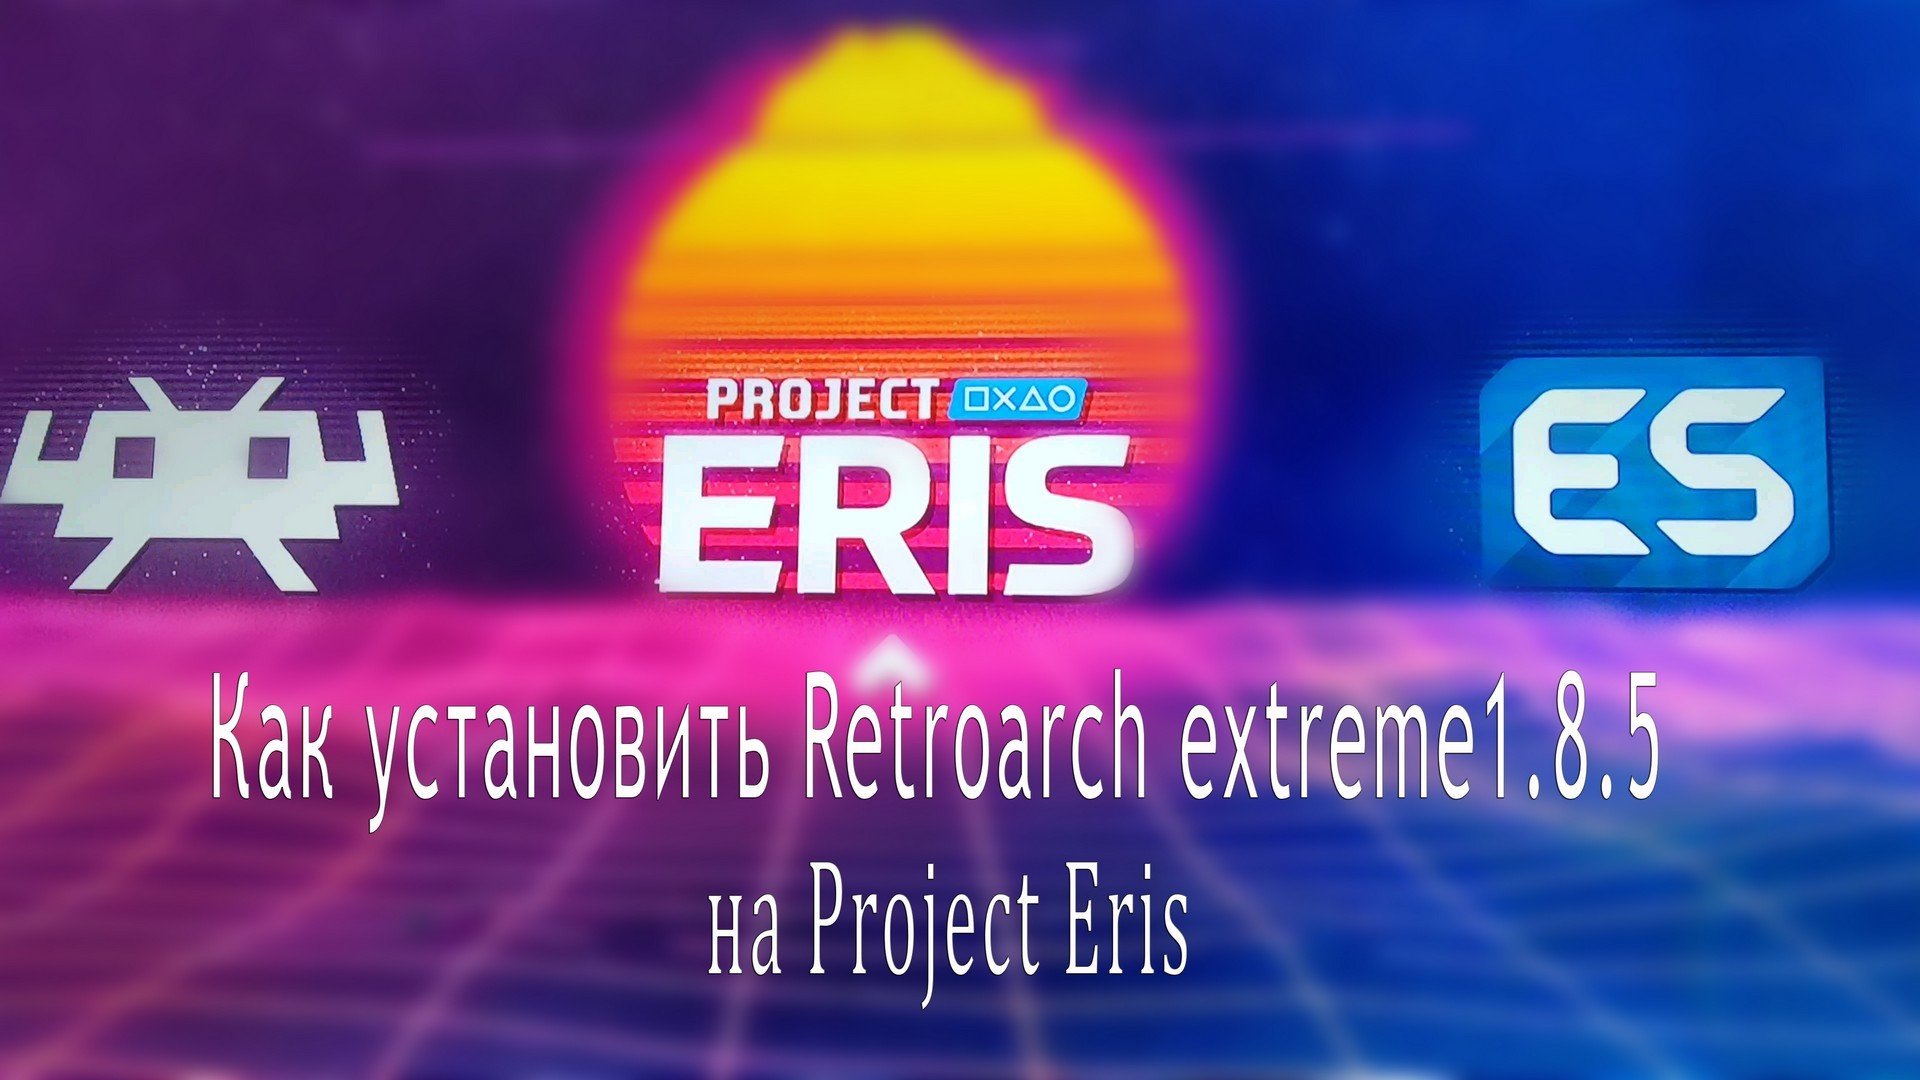 Как установить Retroarch extreme1.8.5 на Project Eris